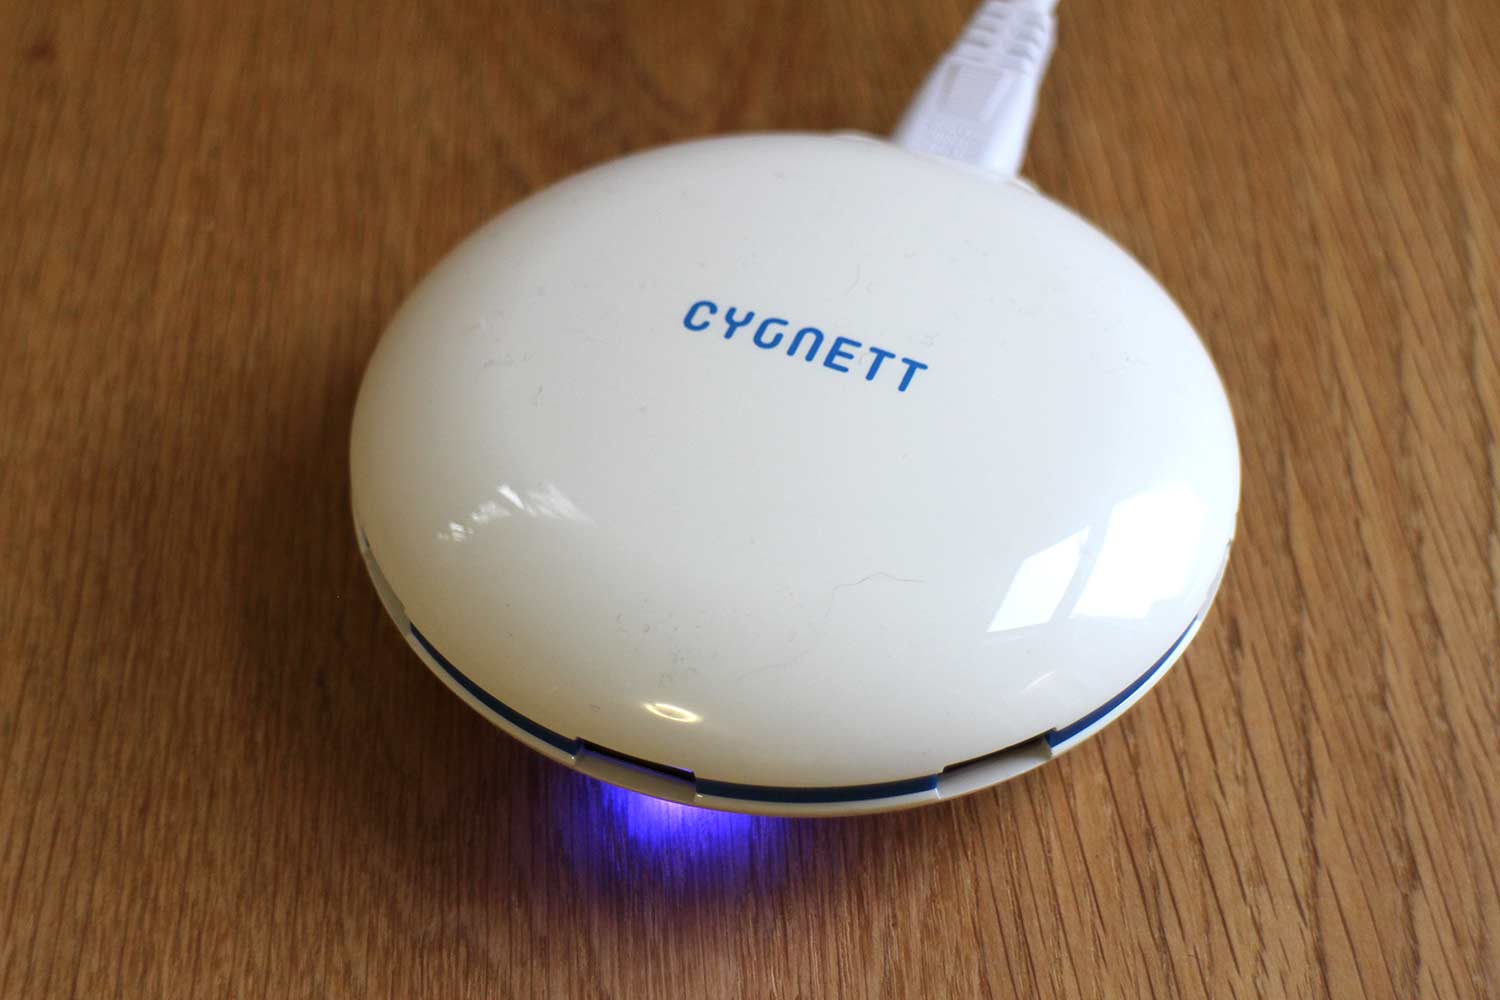 Cygnett Supercharger UFO base